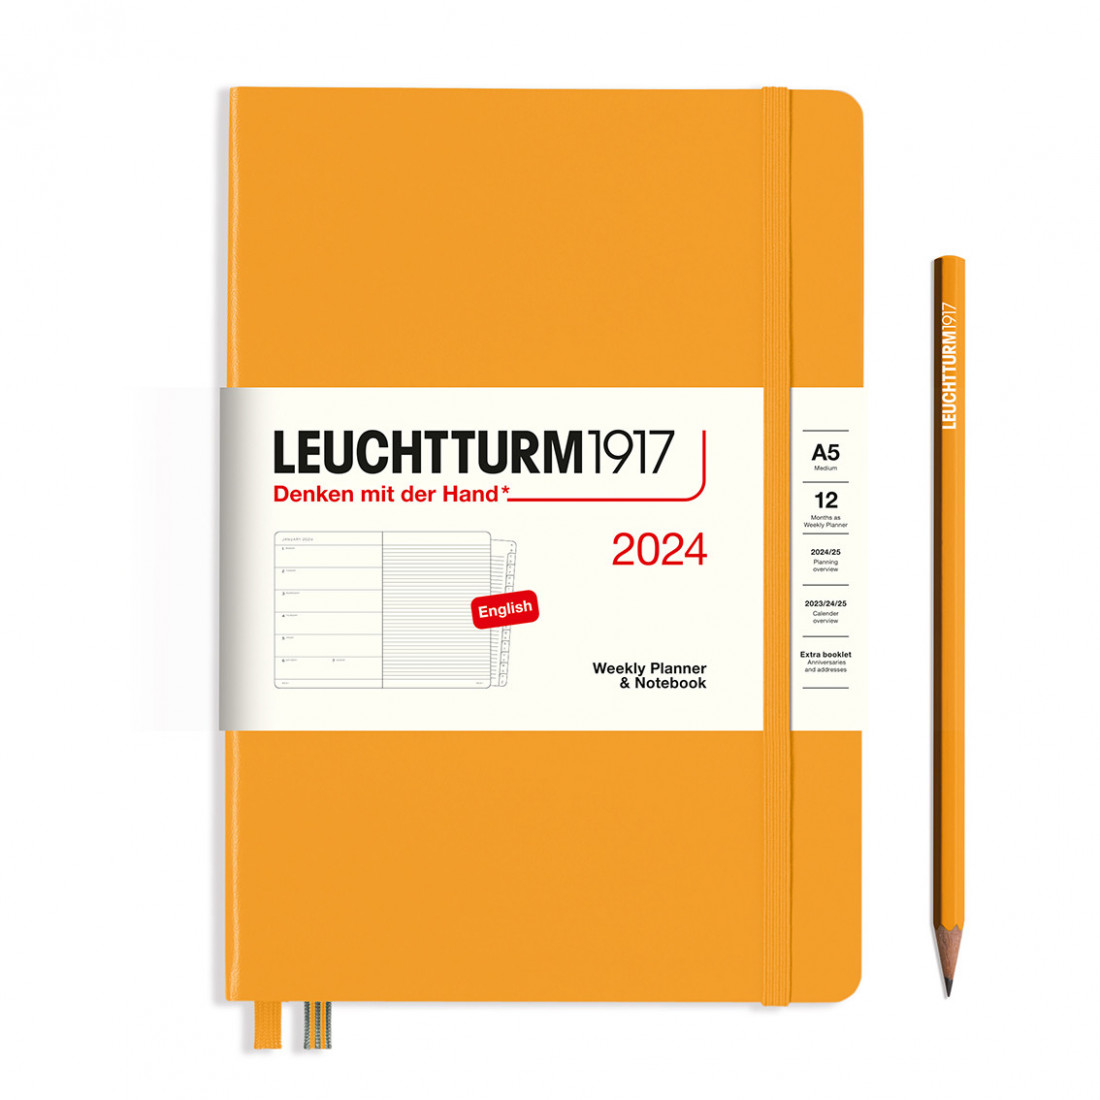 Leuchtturm 1917 Weekly Planner and Notebook 2024 Rising Sun Medium A5 Hard Cover